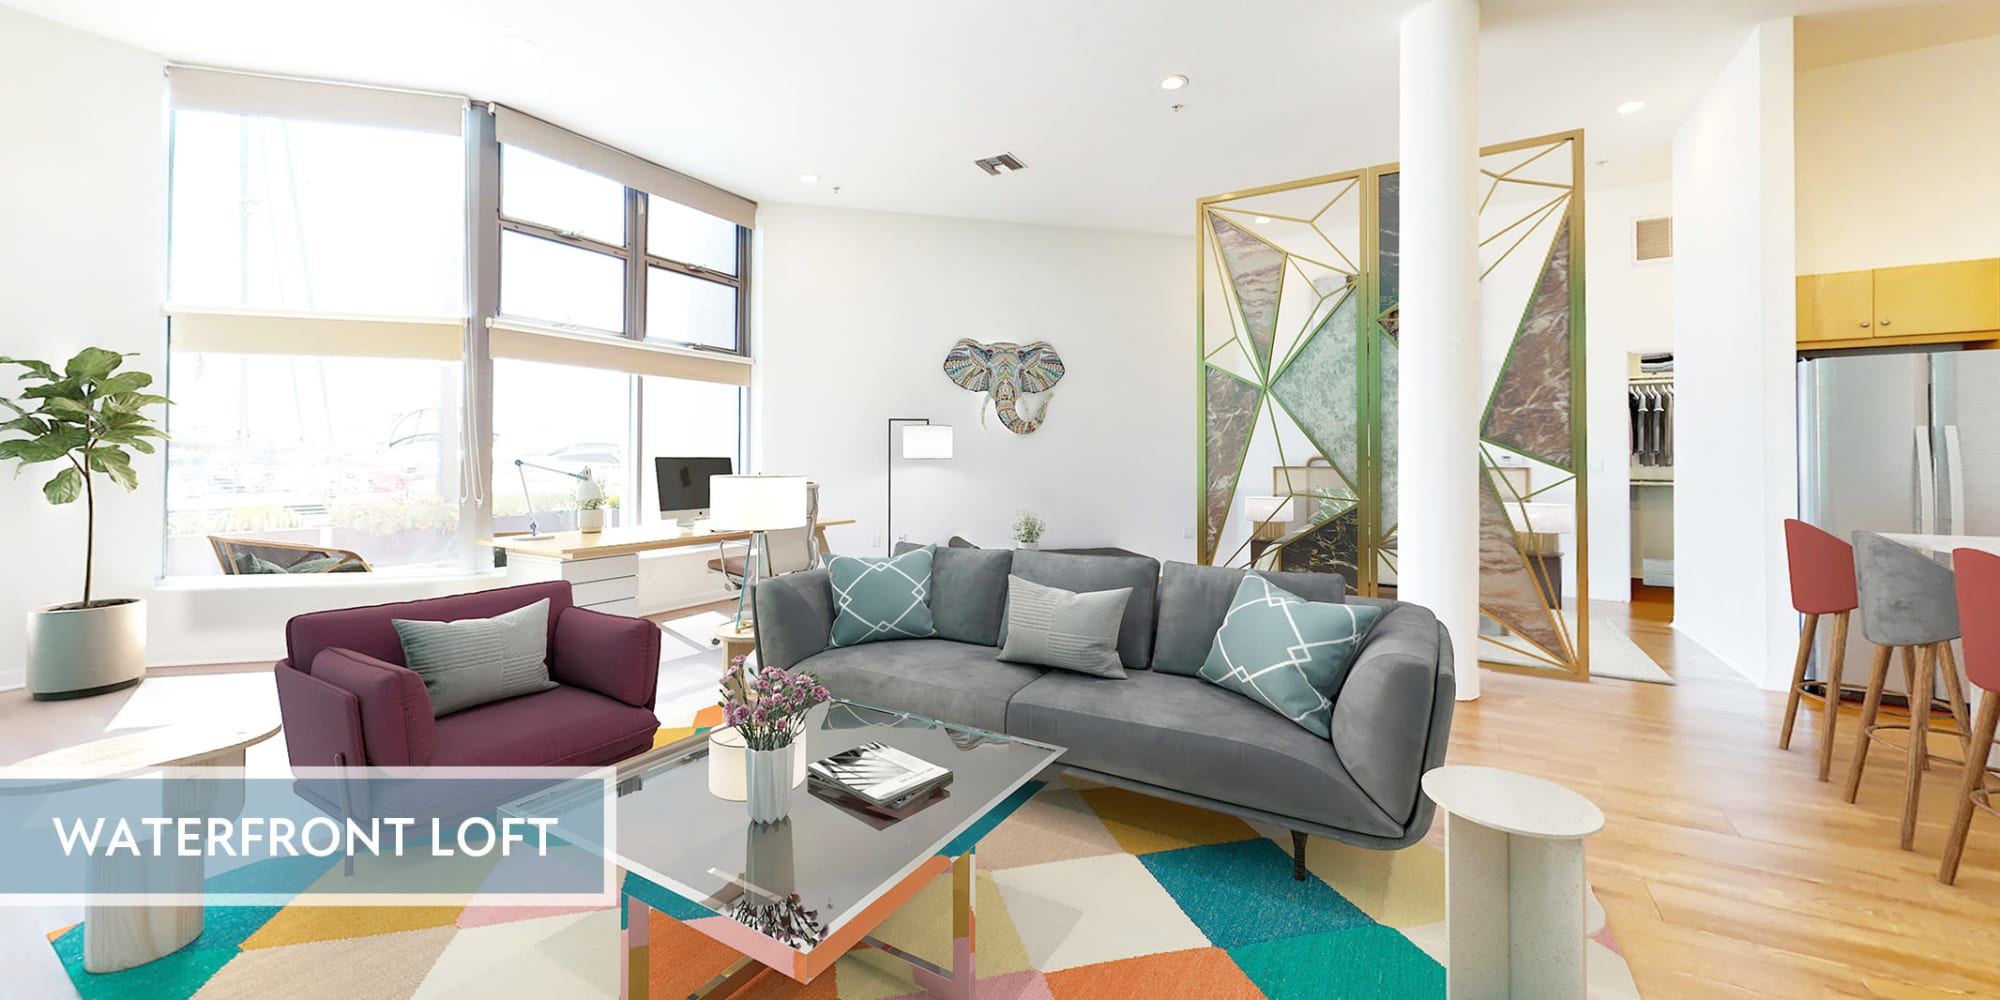 Spacious loft apartment's living room with waterfront views and hardwood floor at Esprit Marina del Rey in Marina del Rey, California